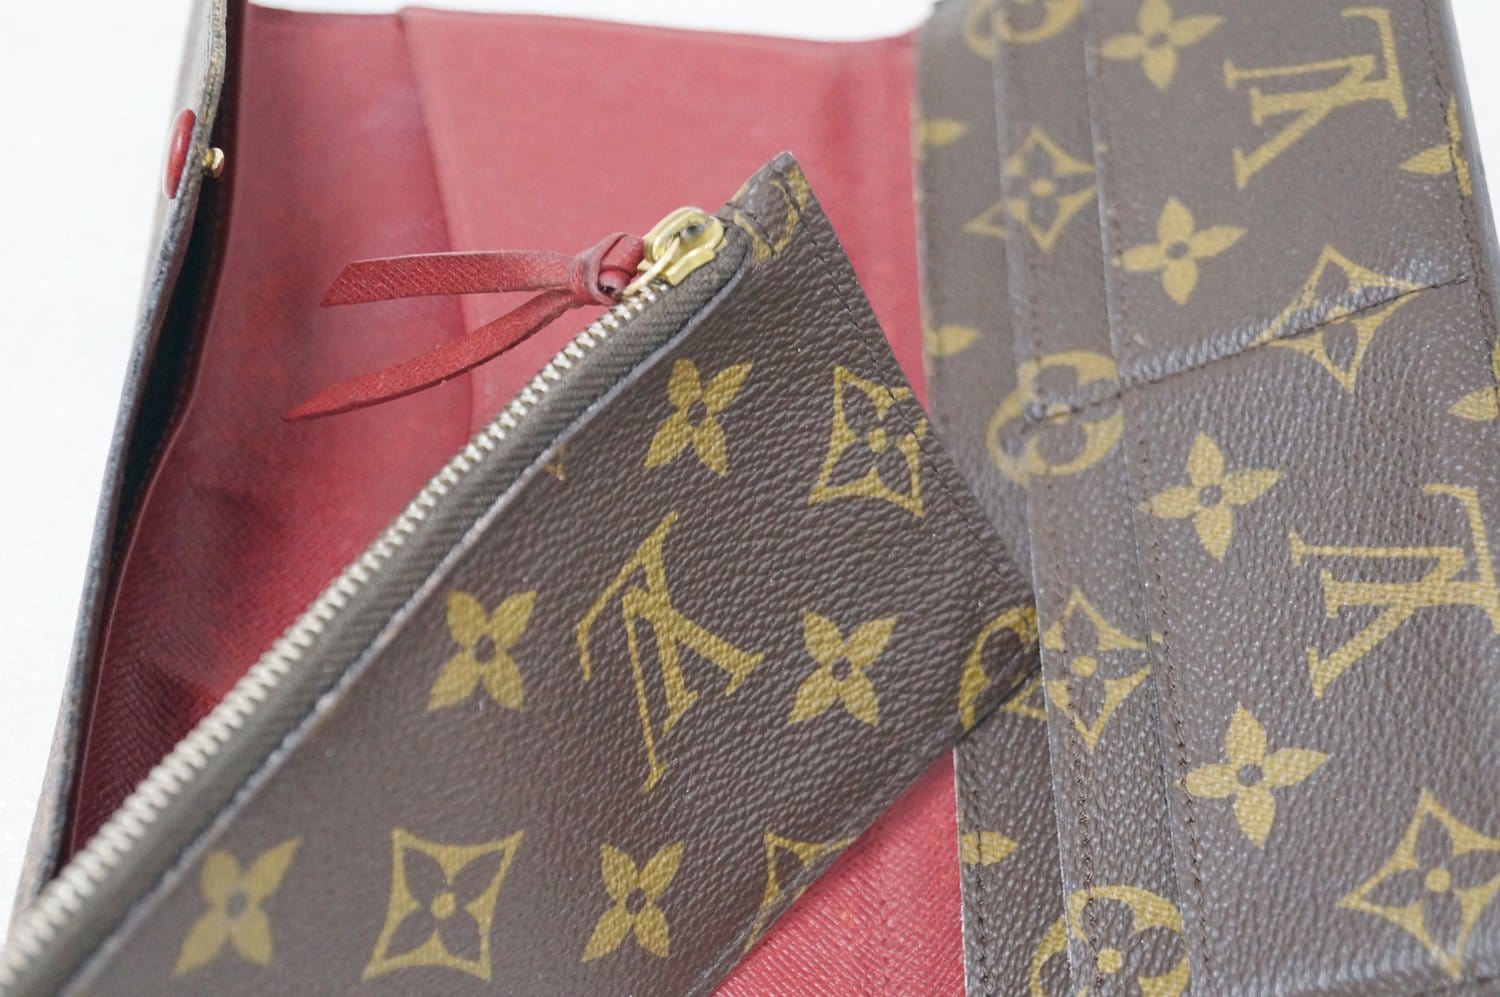 Louis Vuitton Limited Sarah Kabuki Wallet Bag Purse New